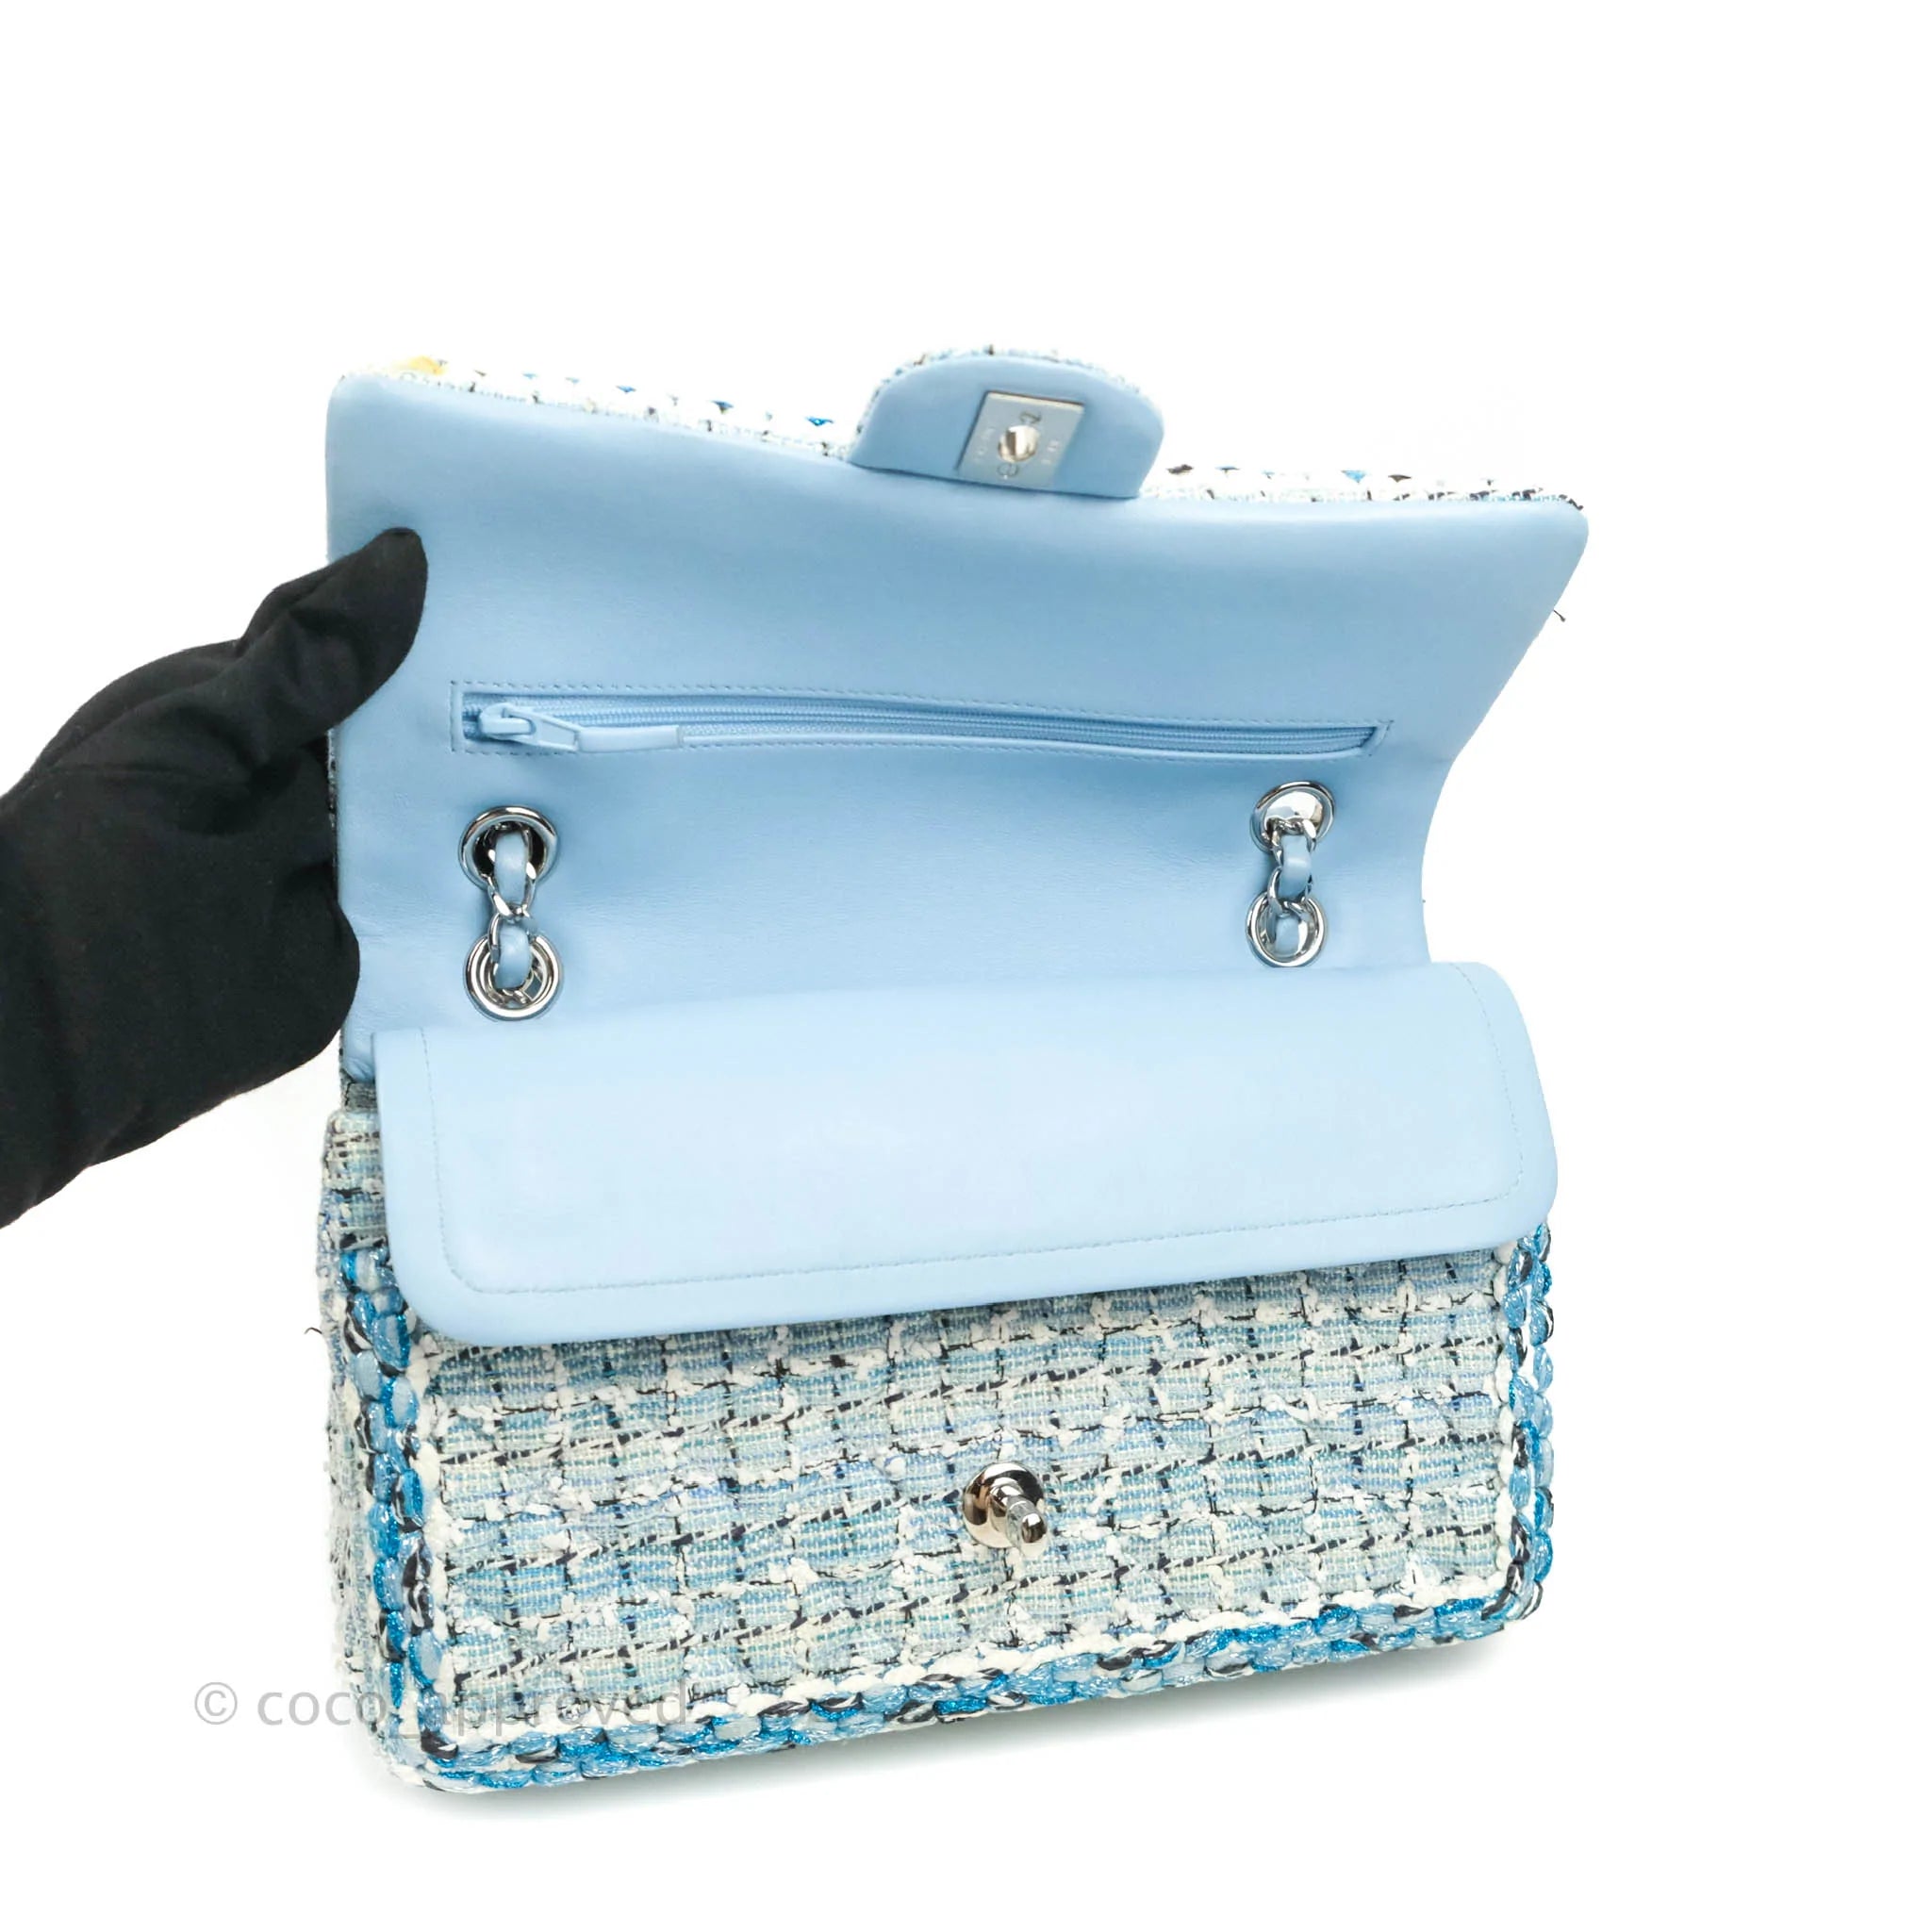 Chanel Blue Tweed Classic Flap Bag